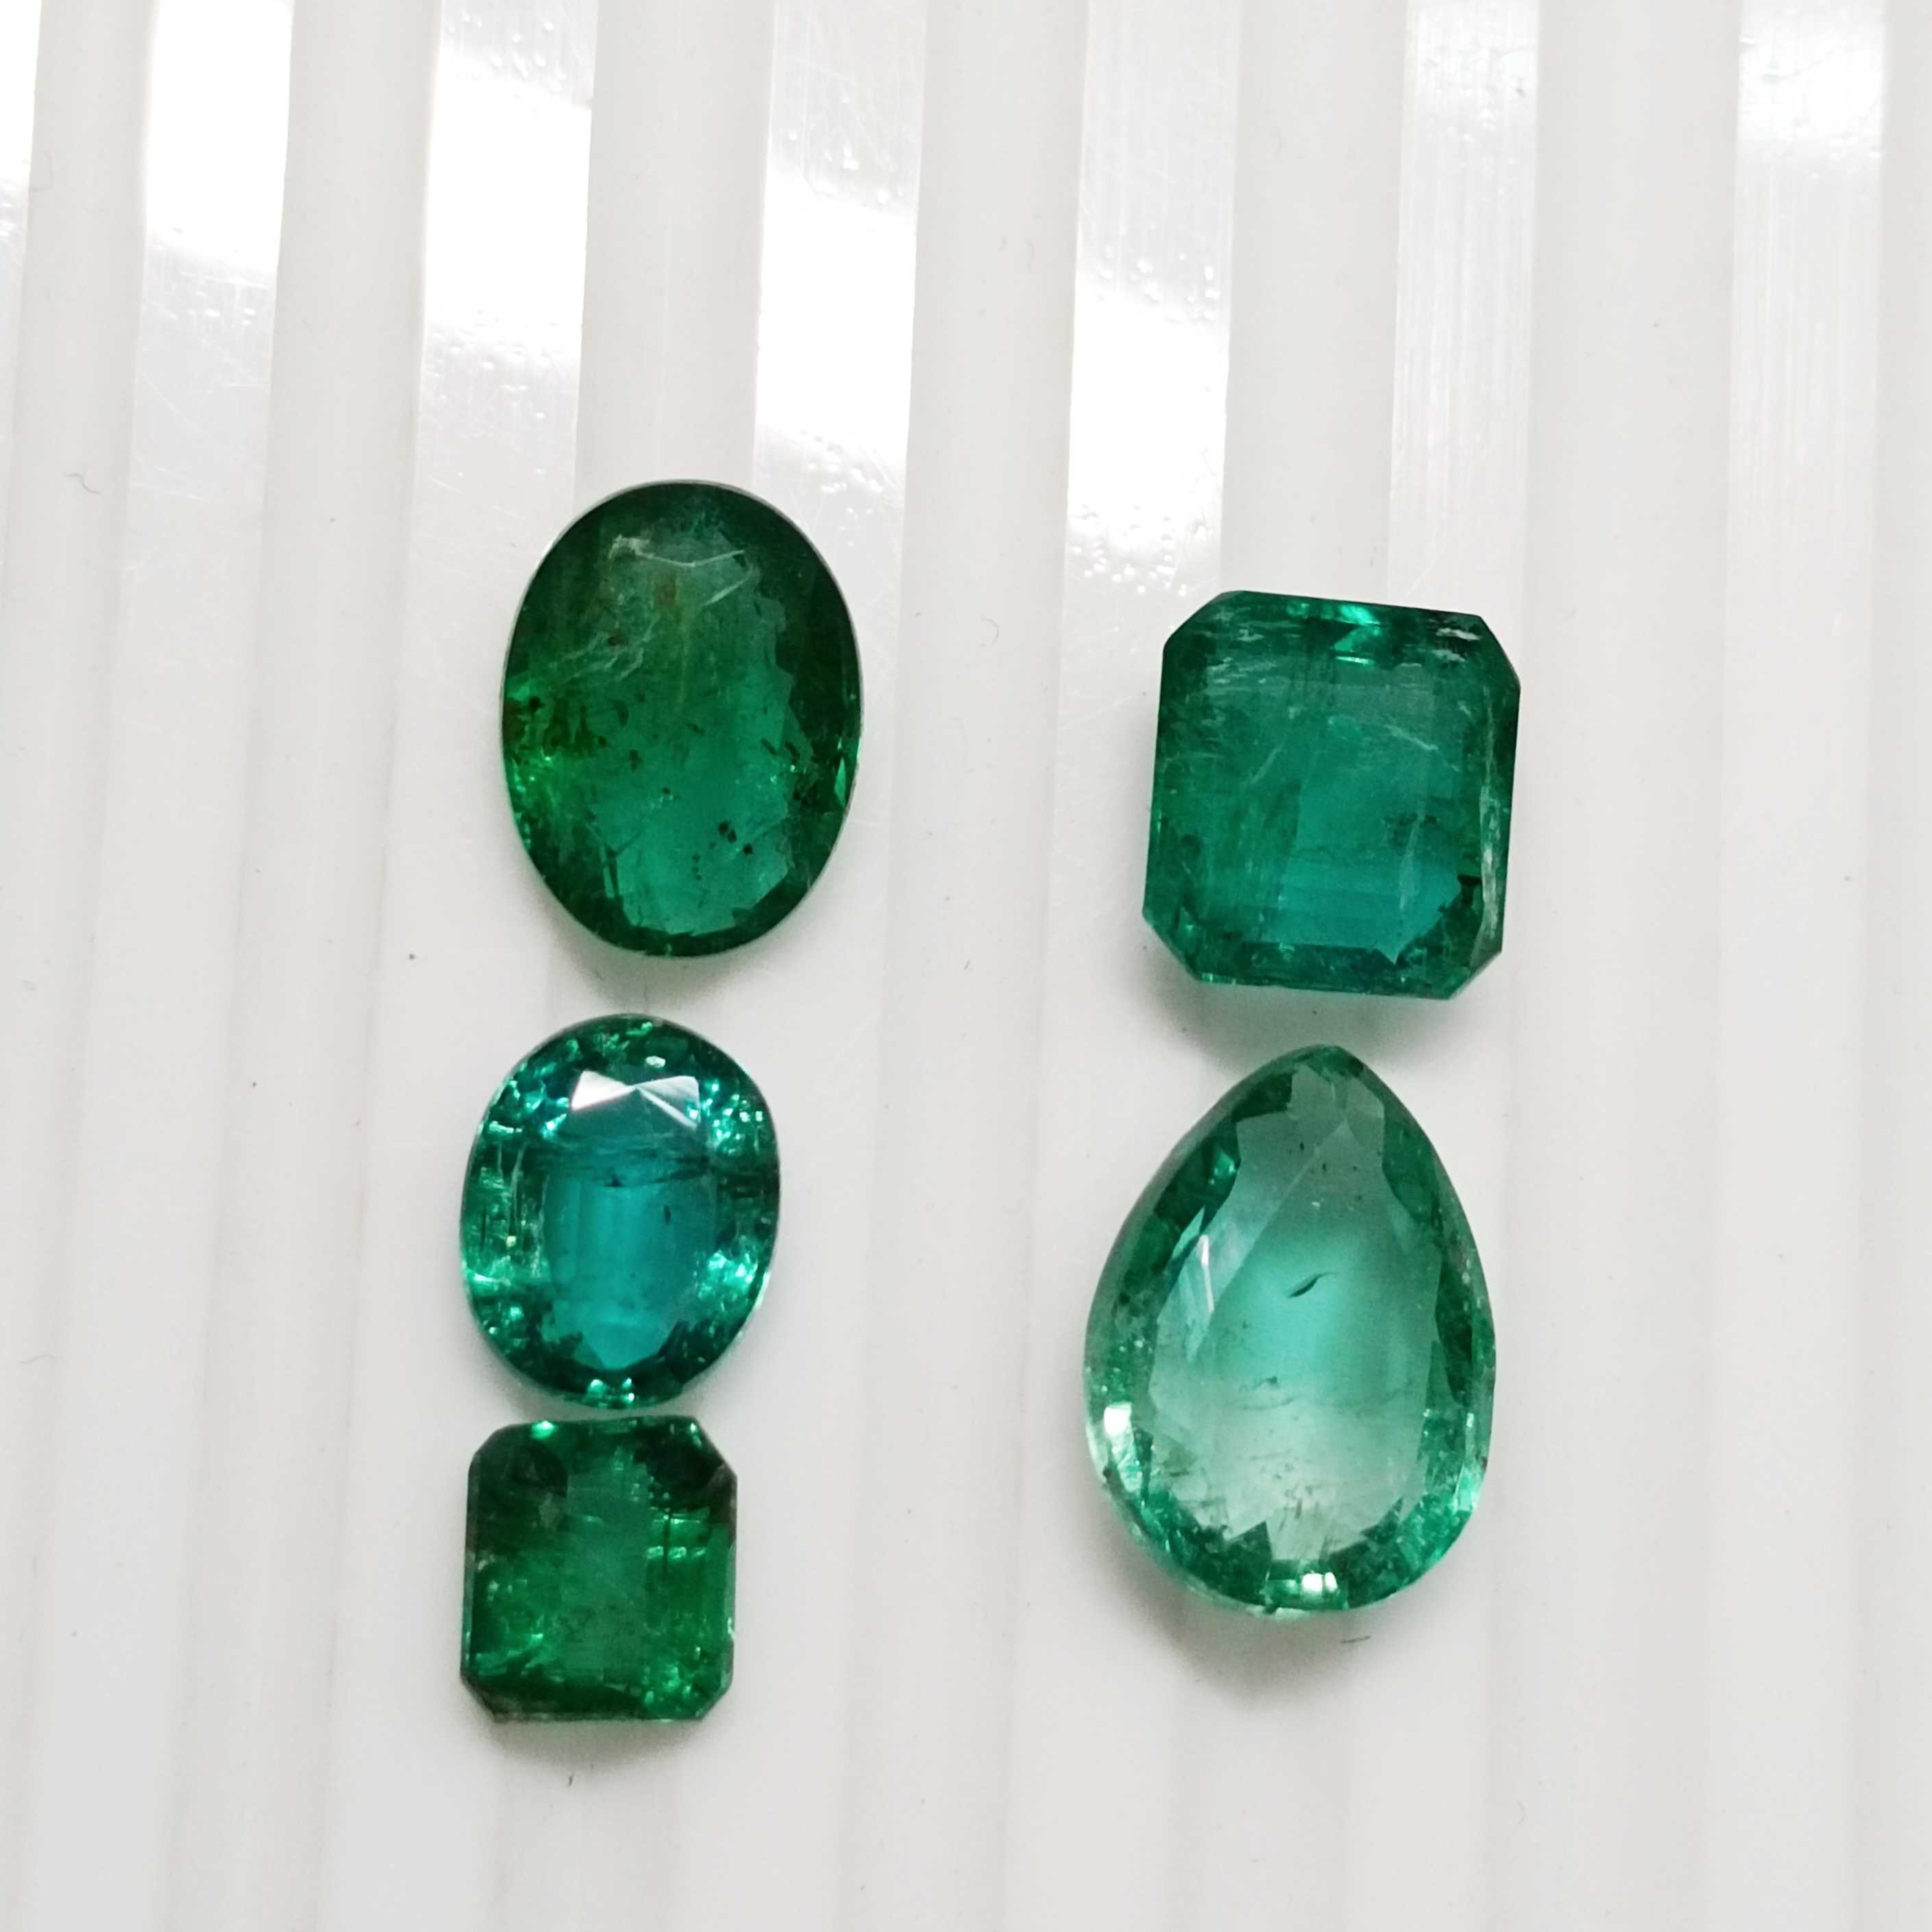 9.27ct 5 pcs vivid medium to deep green Zambian emerald stone parcel